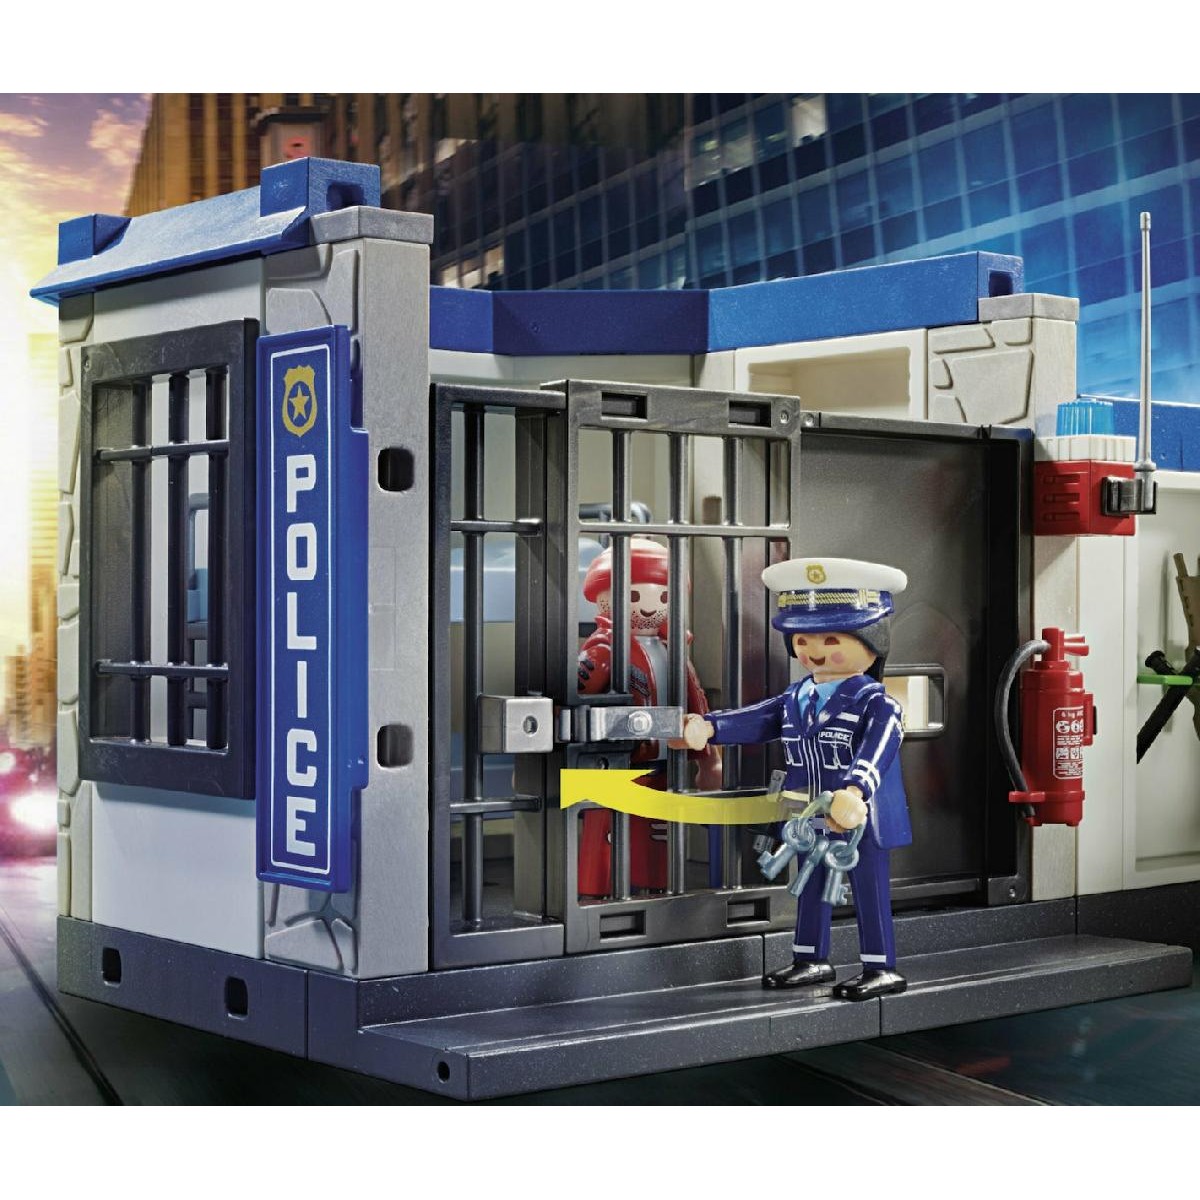 Playmobil City Action Αστυνομικό Τμήμα για 4-10 ετών (70568)